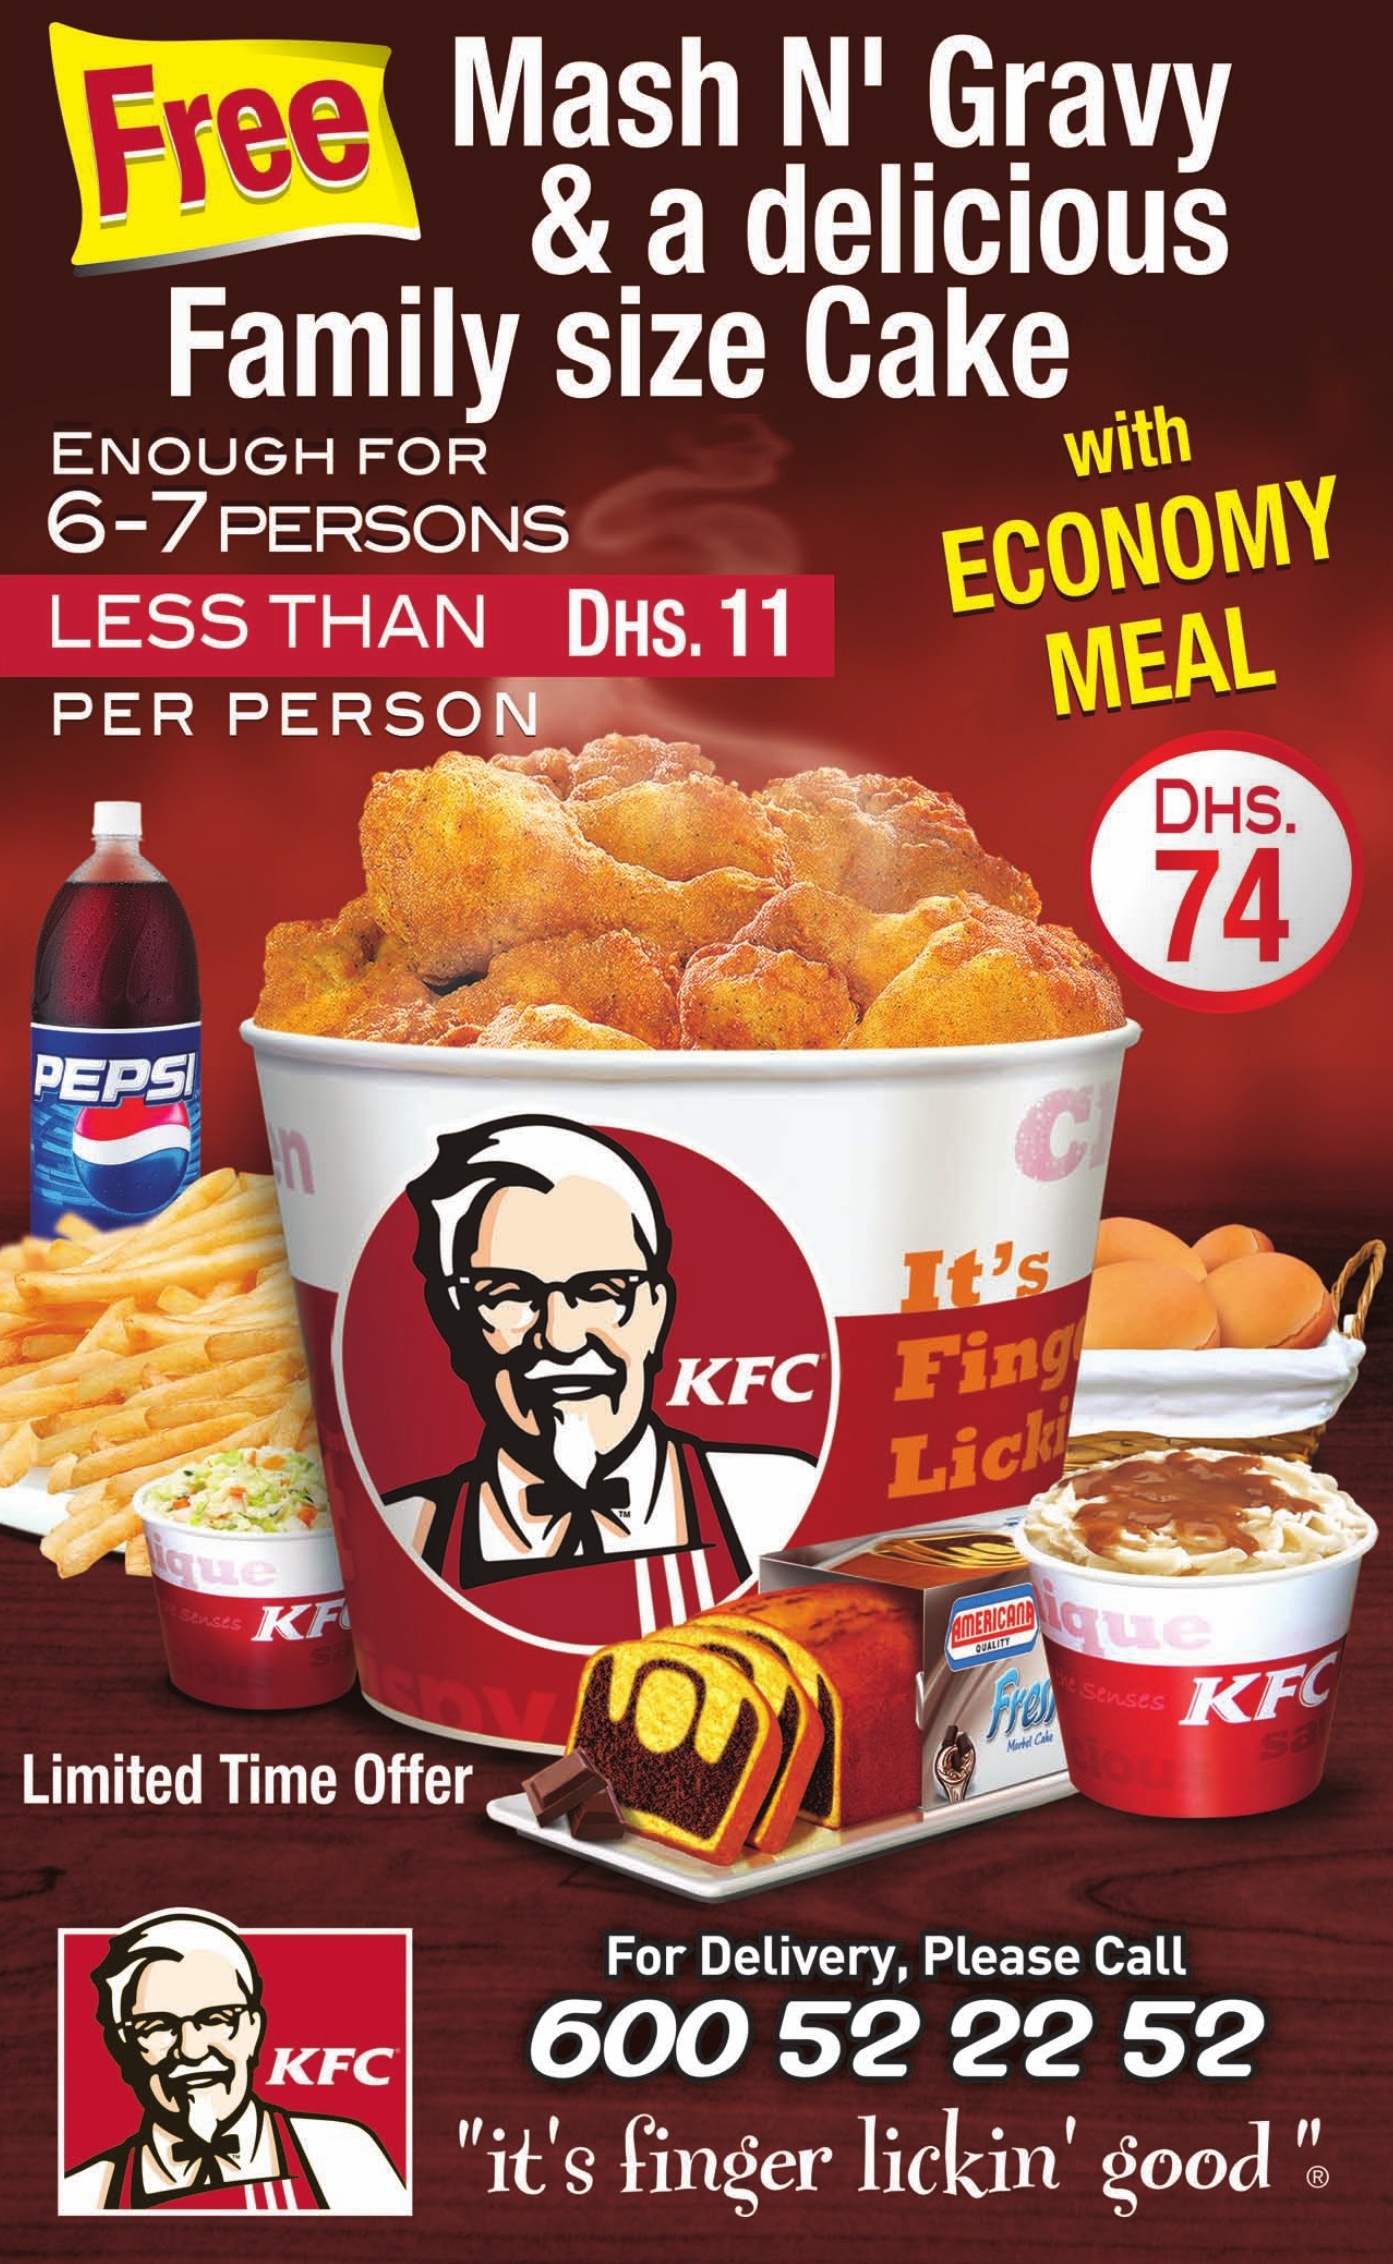 KFC Economy meal offer  Damn Planet!